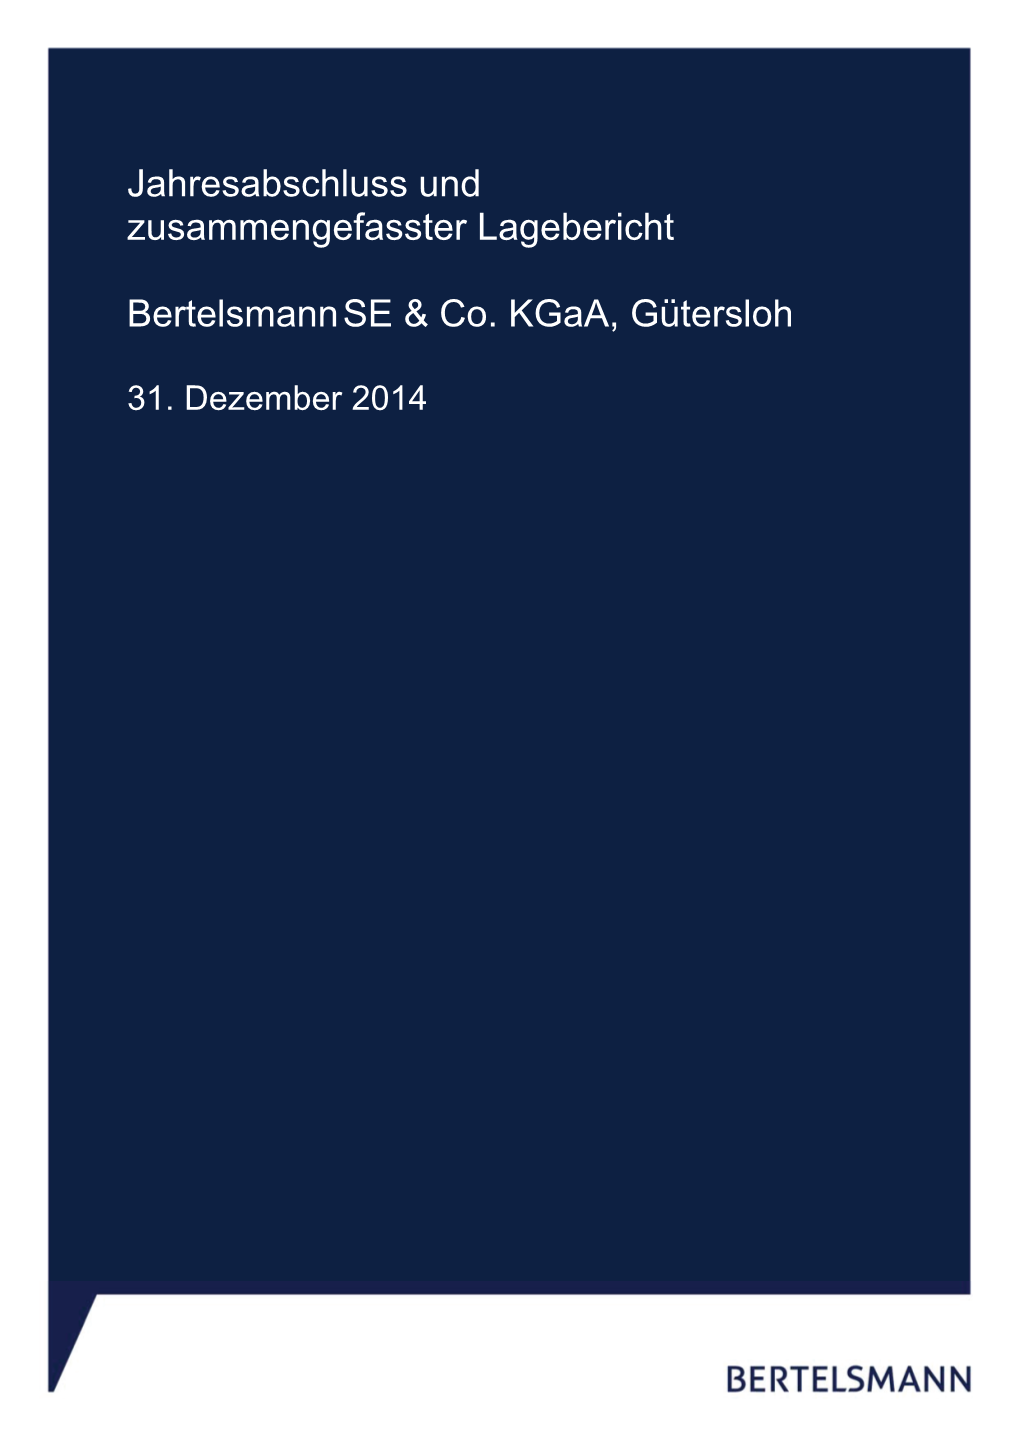 Jahresabschluss 2014 Bertelsmann SE & Co. Kgaa